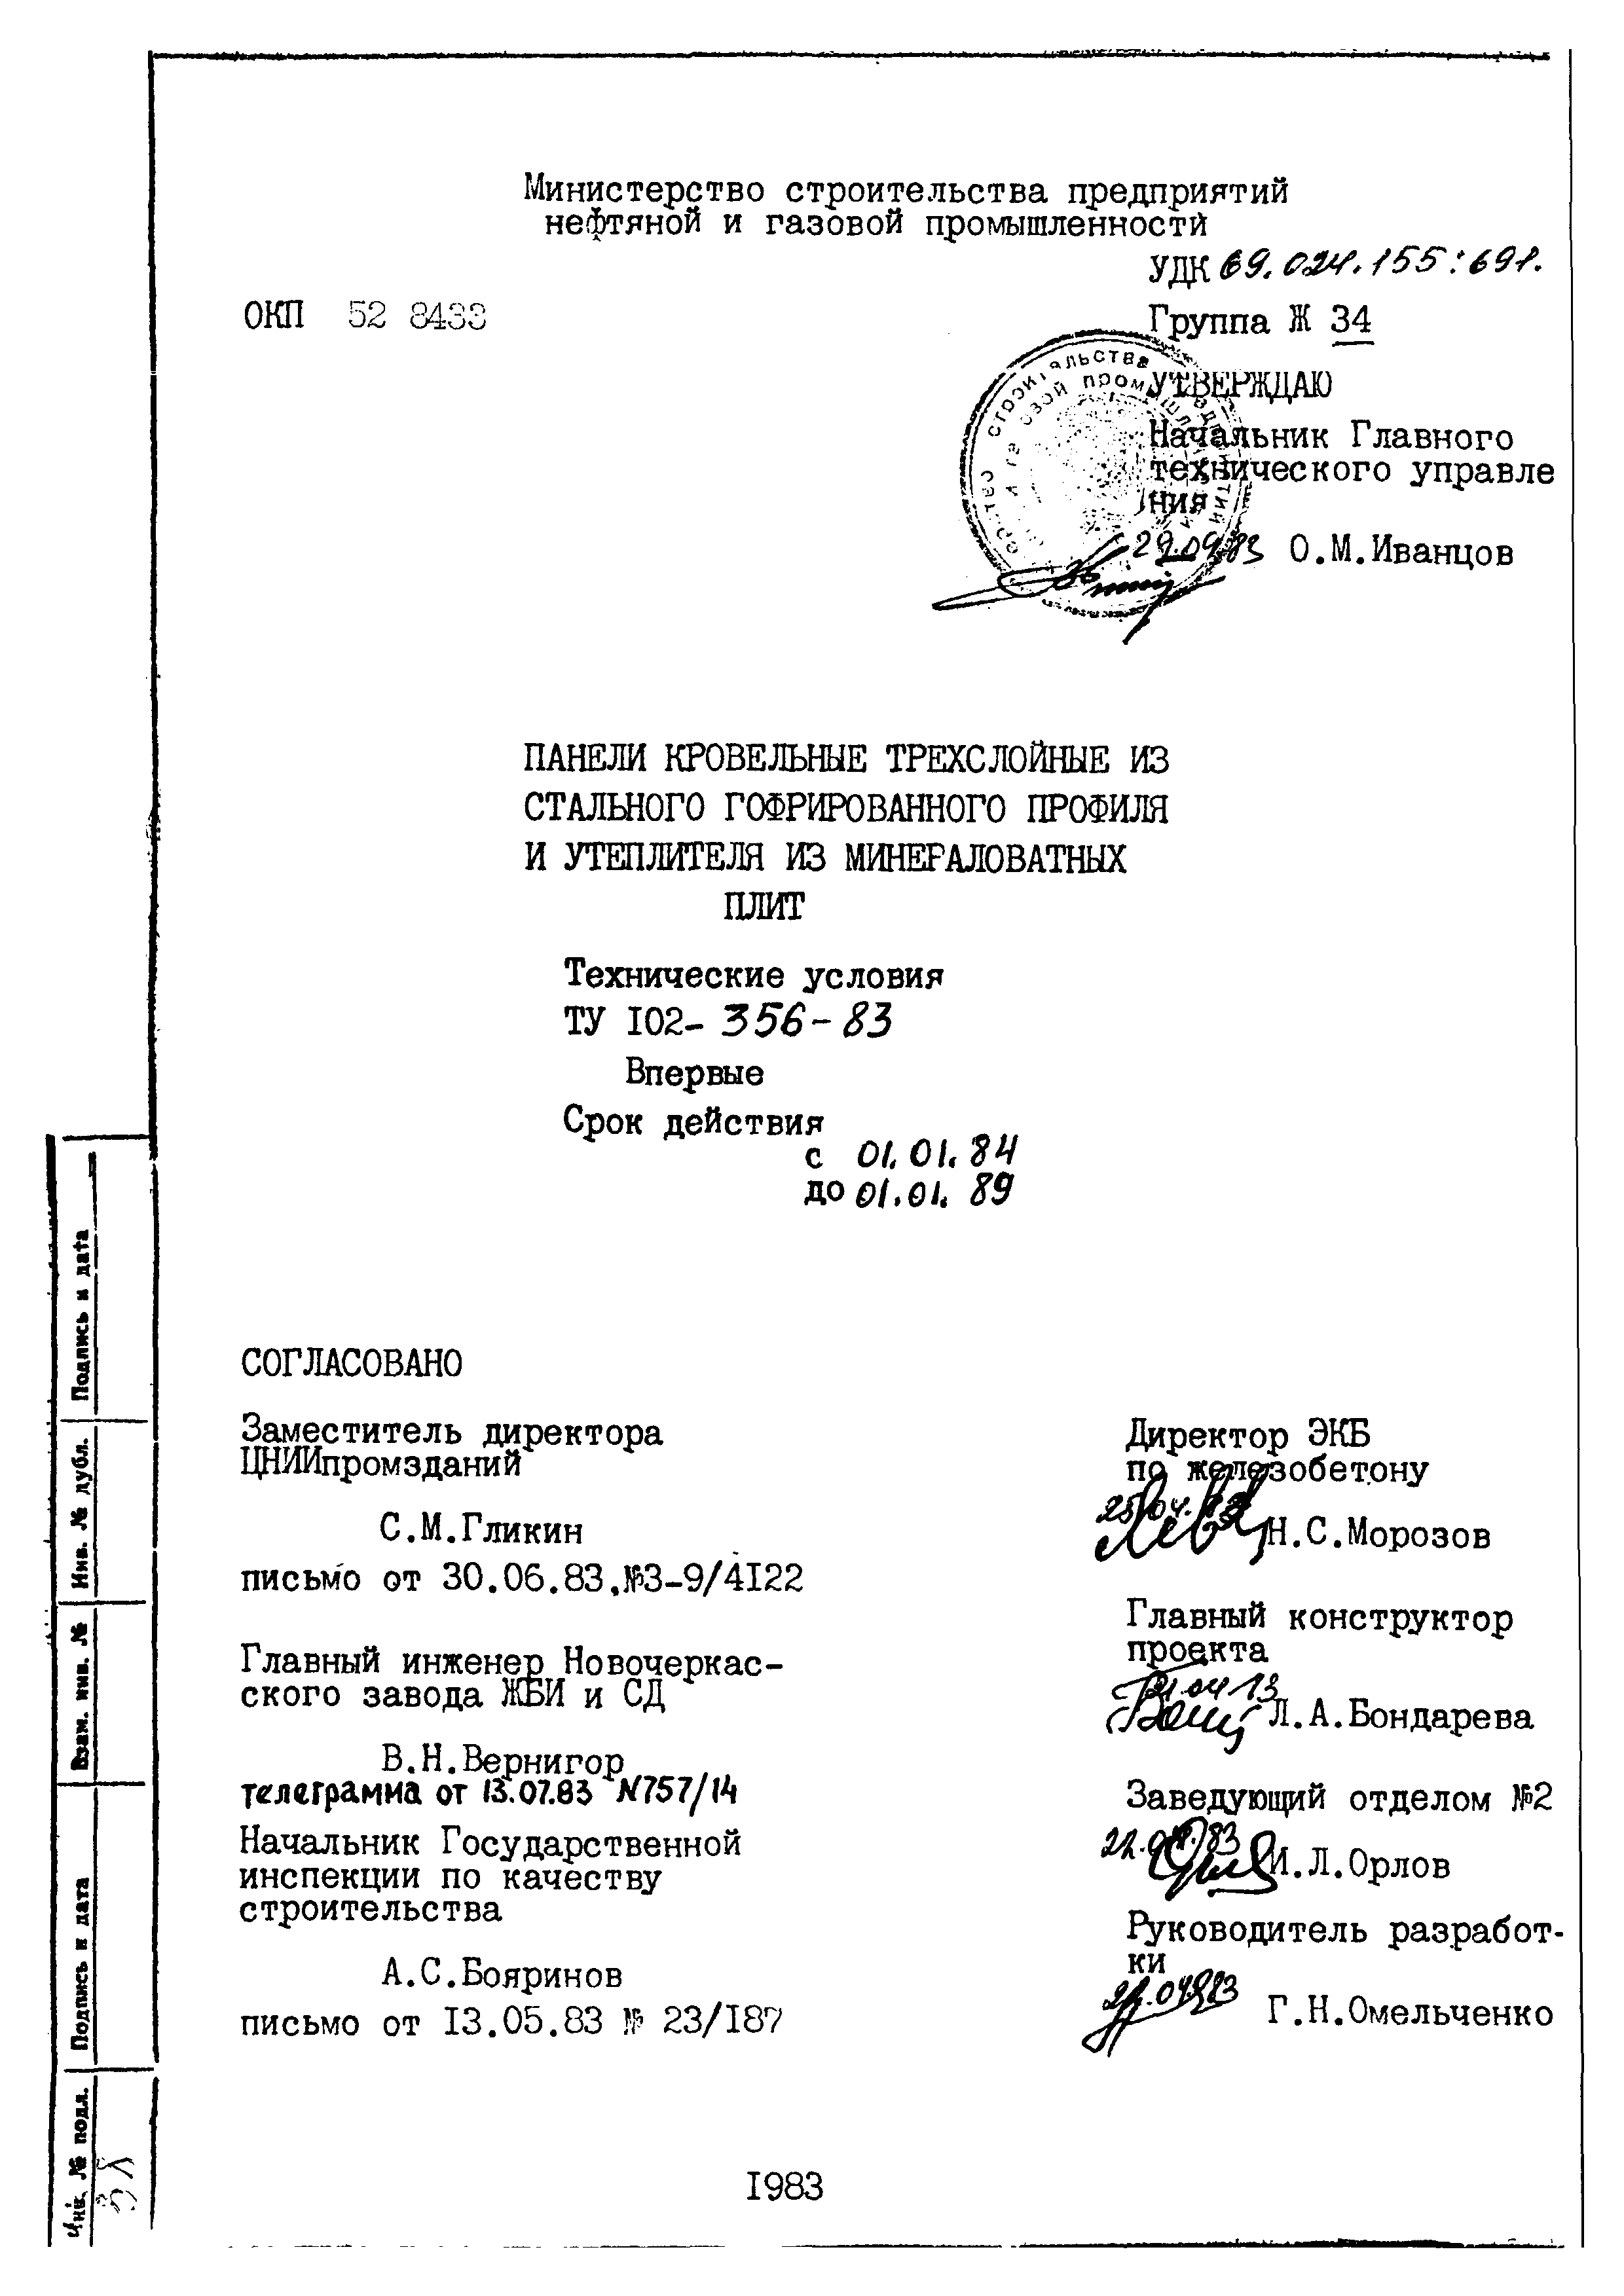 ТУ 102-356-83